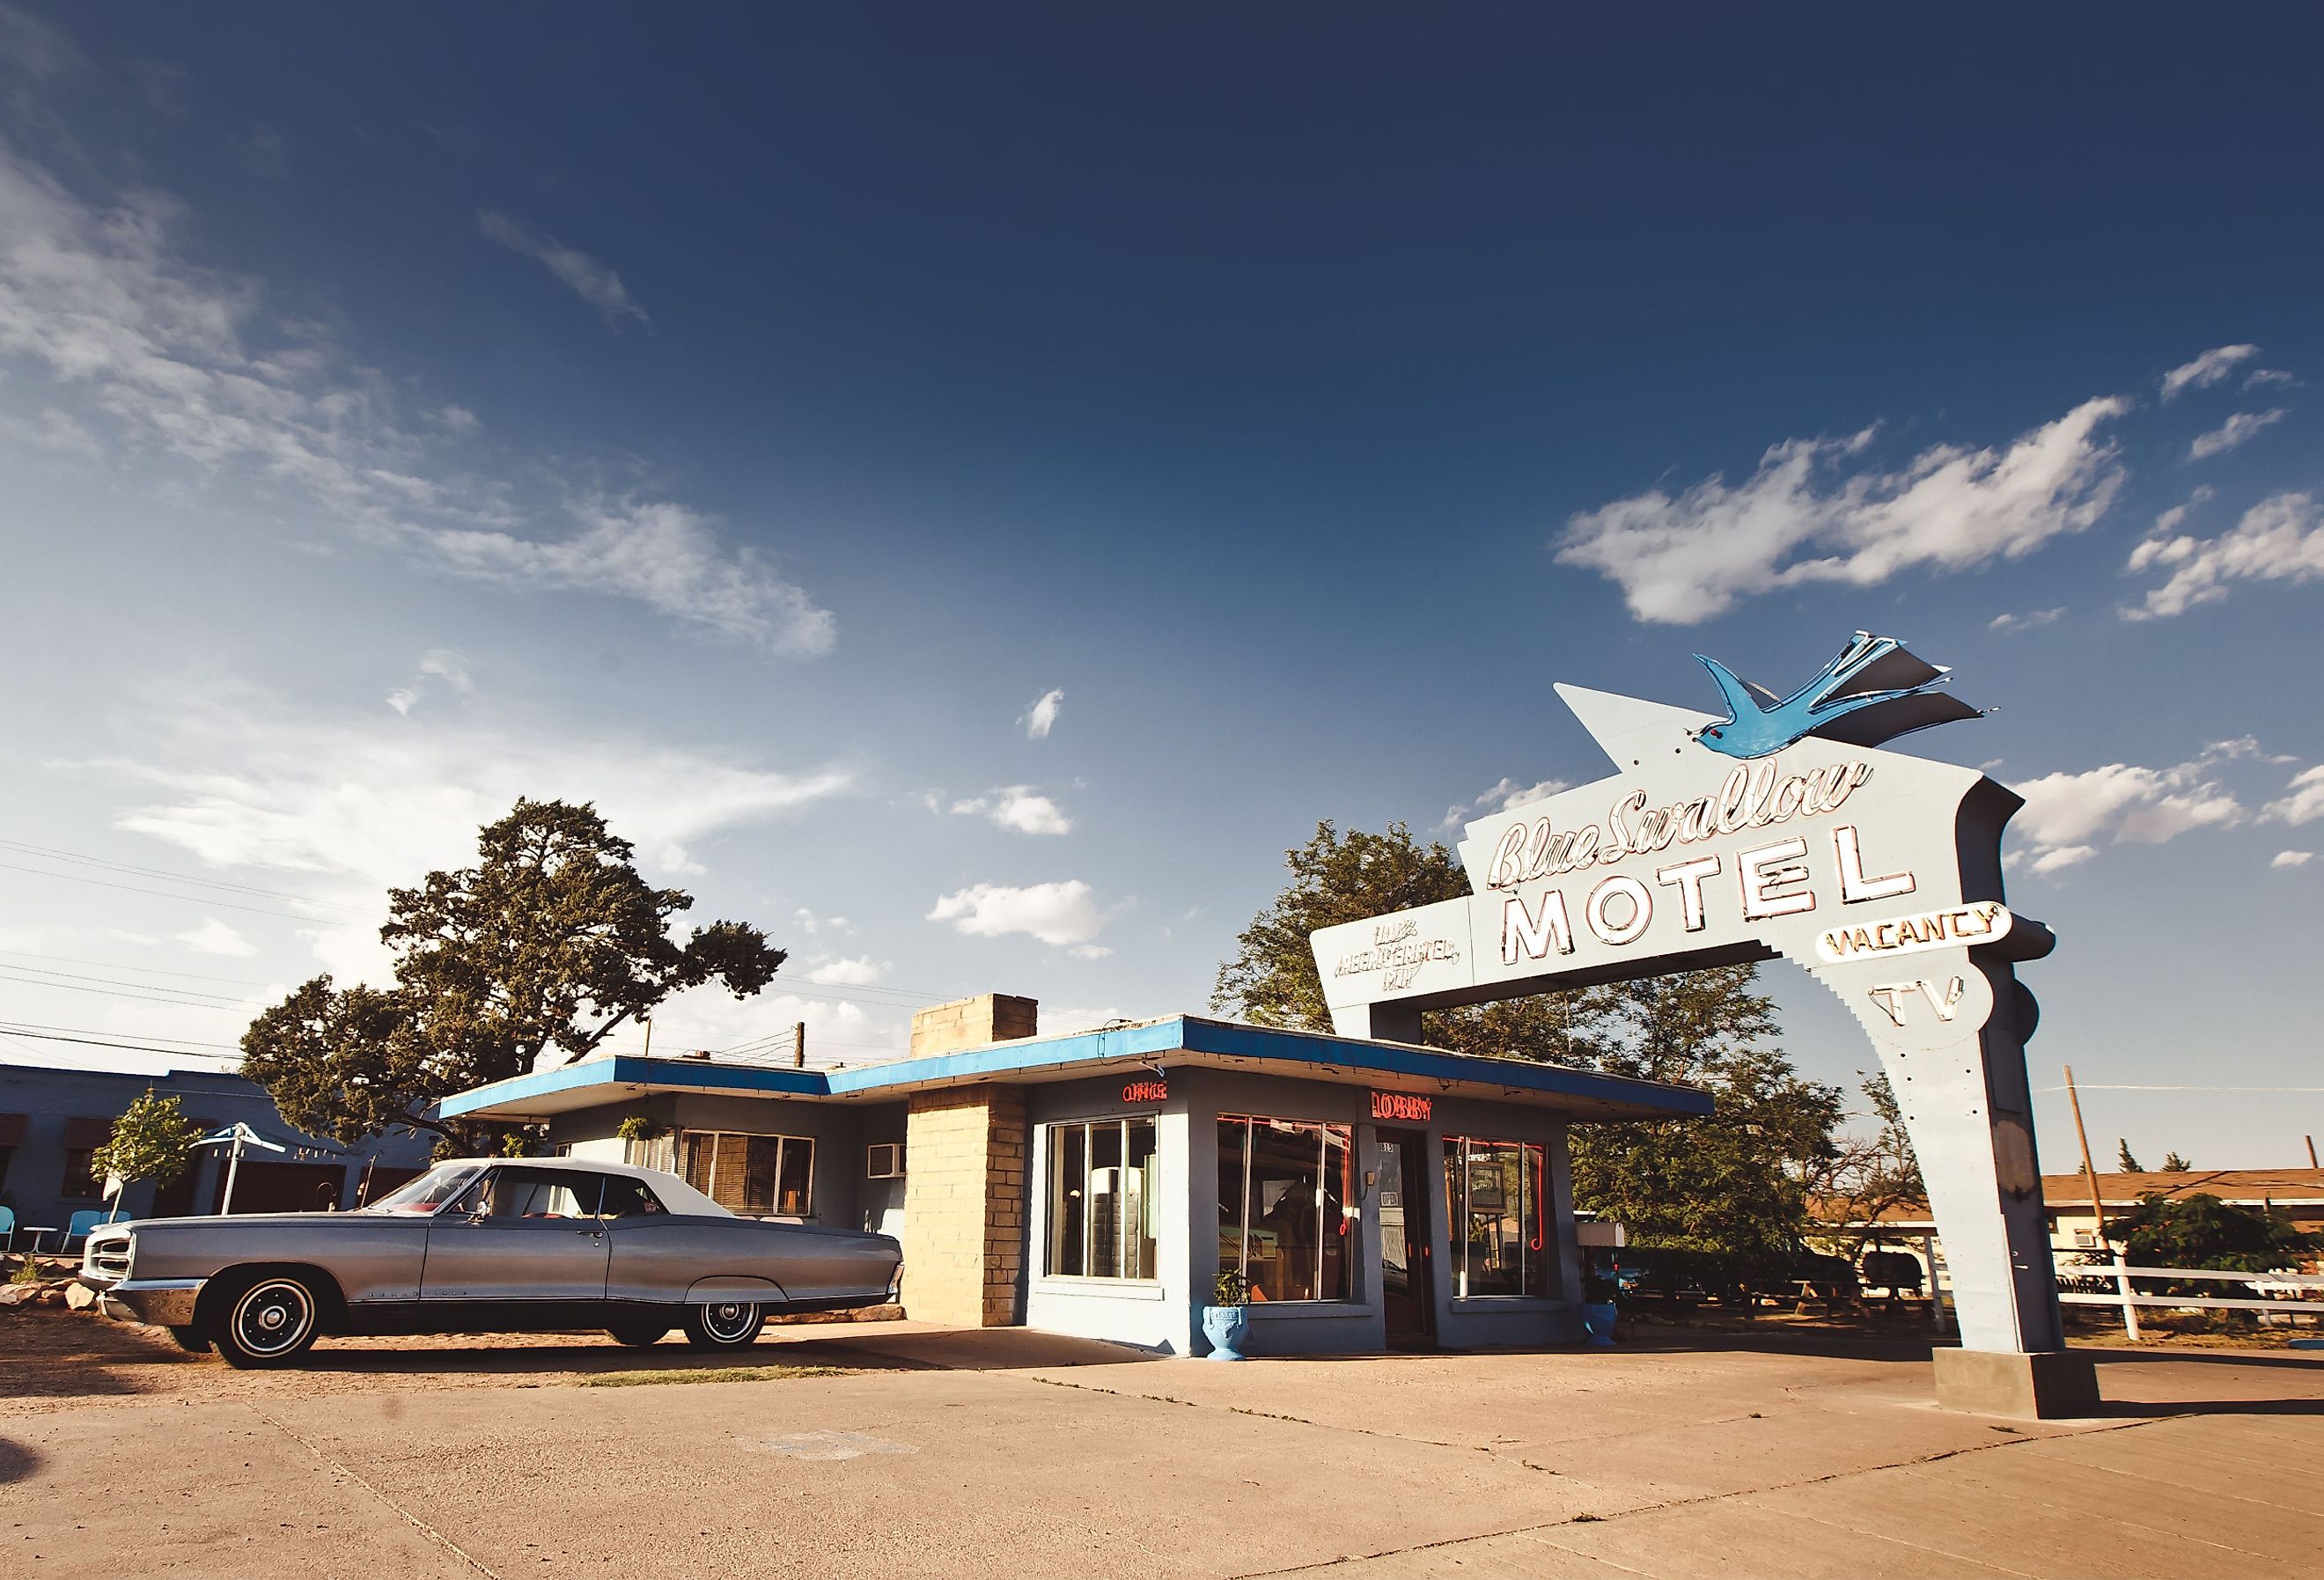 Blue Swallow Motel on Historic Route 66 in Tucumcari, NM. Image credit Andrey Bayda via Shutterstock.